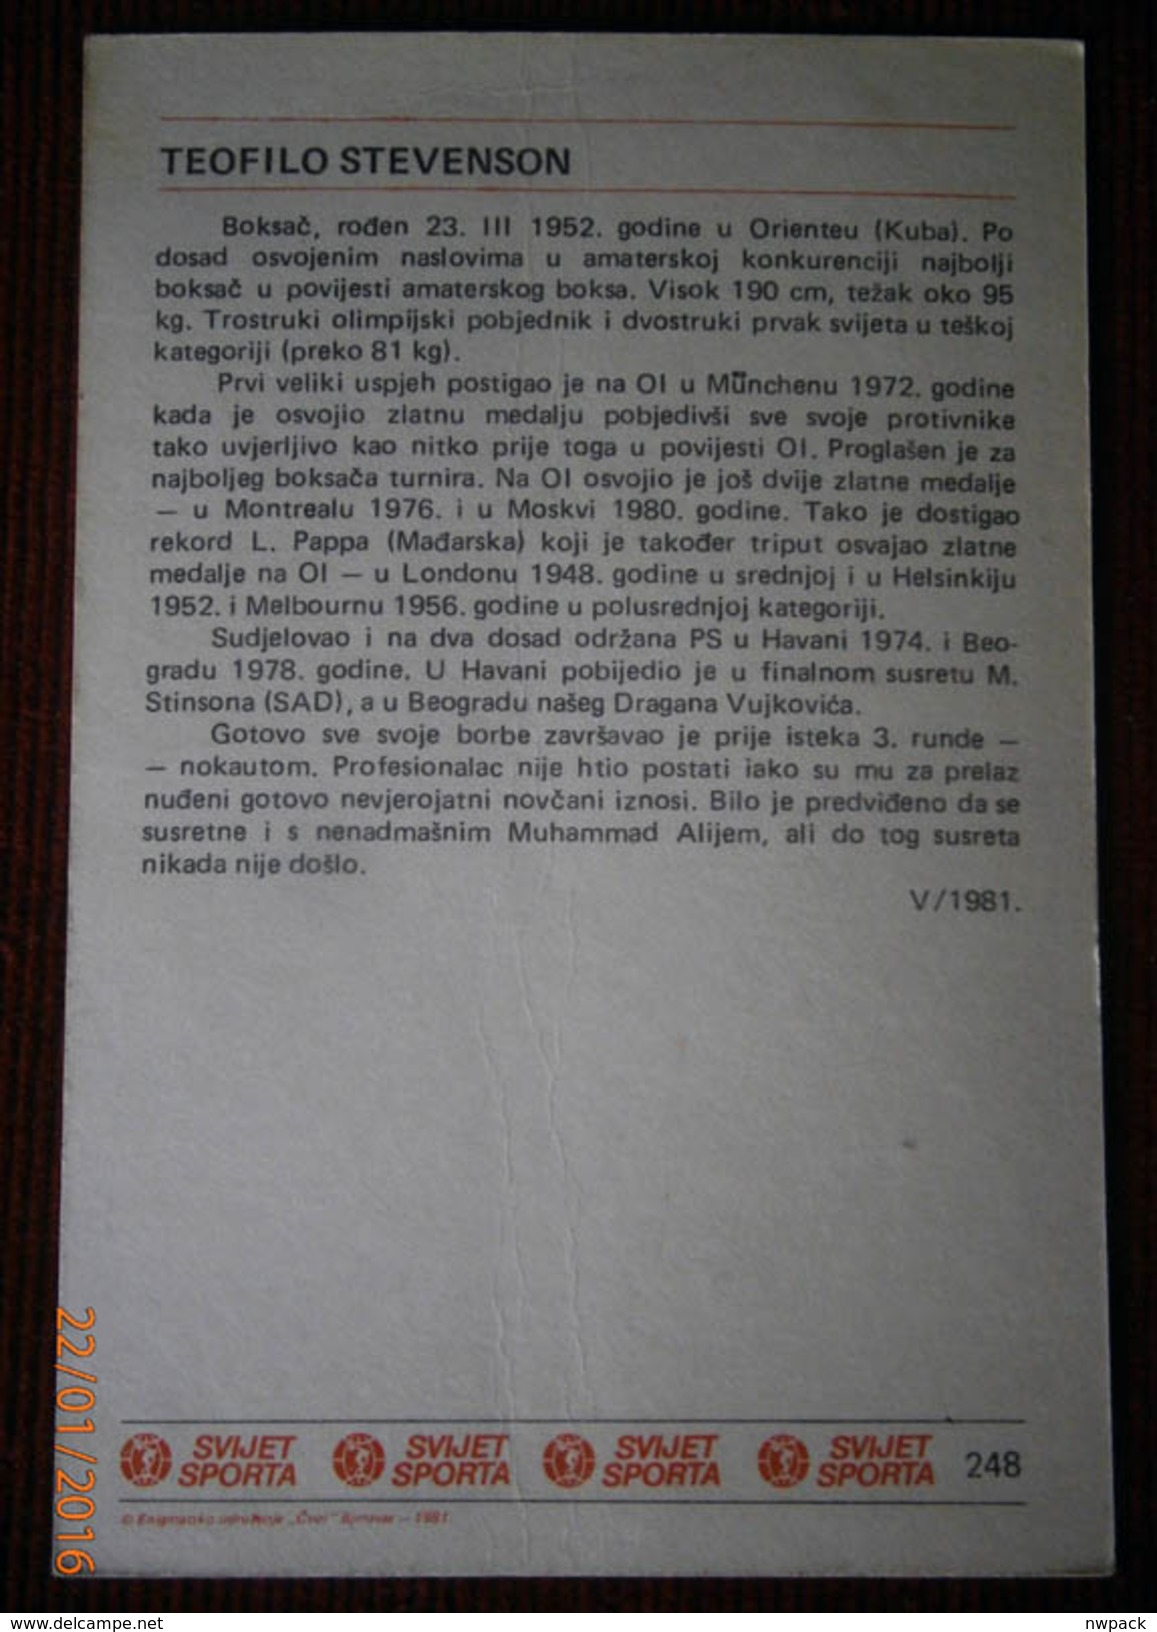 BOX - Trading Card From Ex Yugoslavia - "SVIJET SPORTA" - Teofilo Stevenson  No. 248 -  V / 1981. - Trading Cards